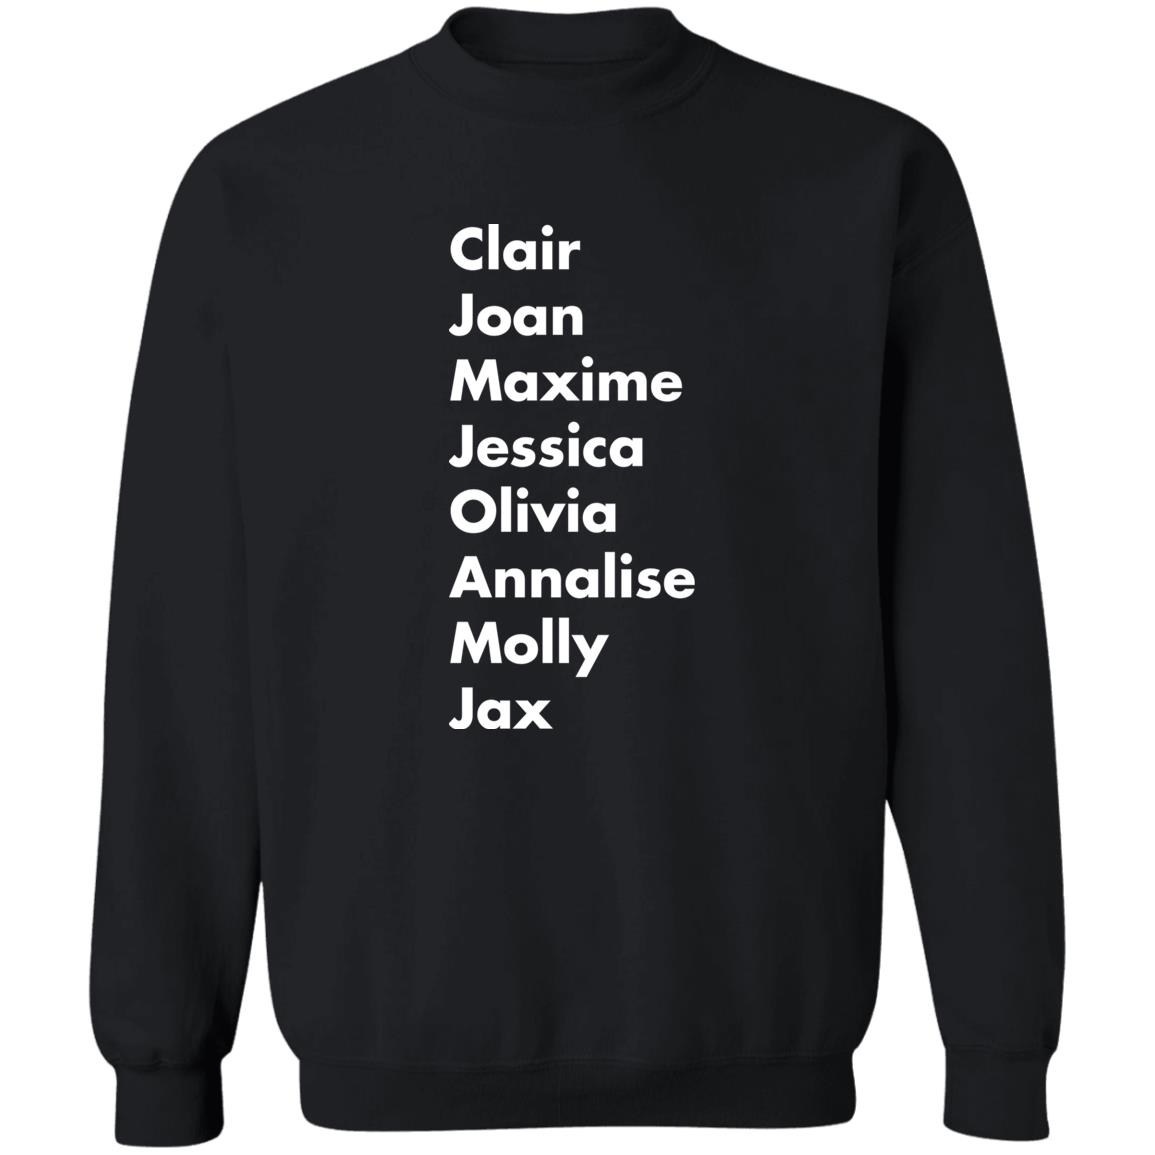 Clair Joan Maxine Jessica Olivia Annalise Molly Jax Shirt 2